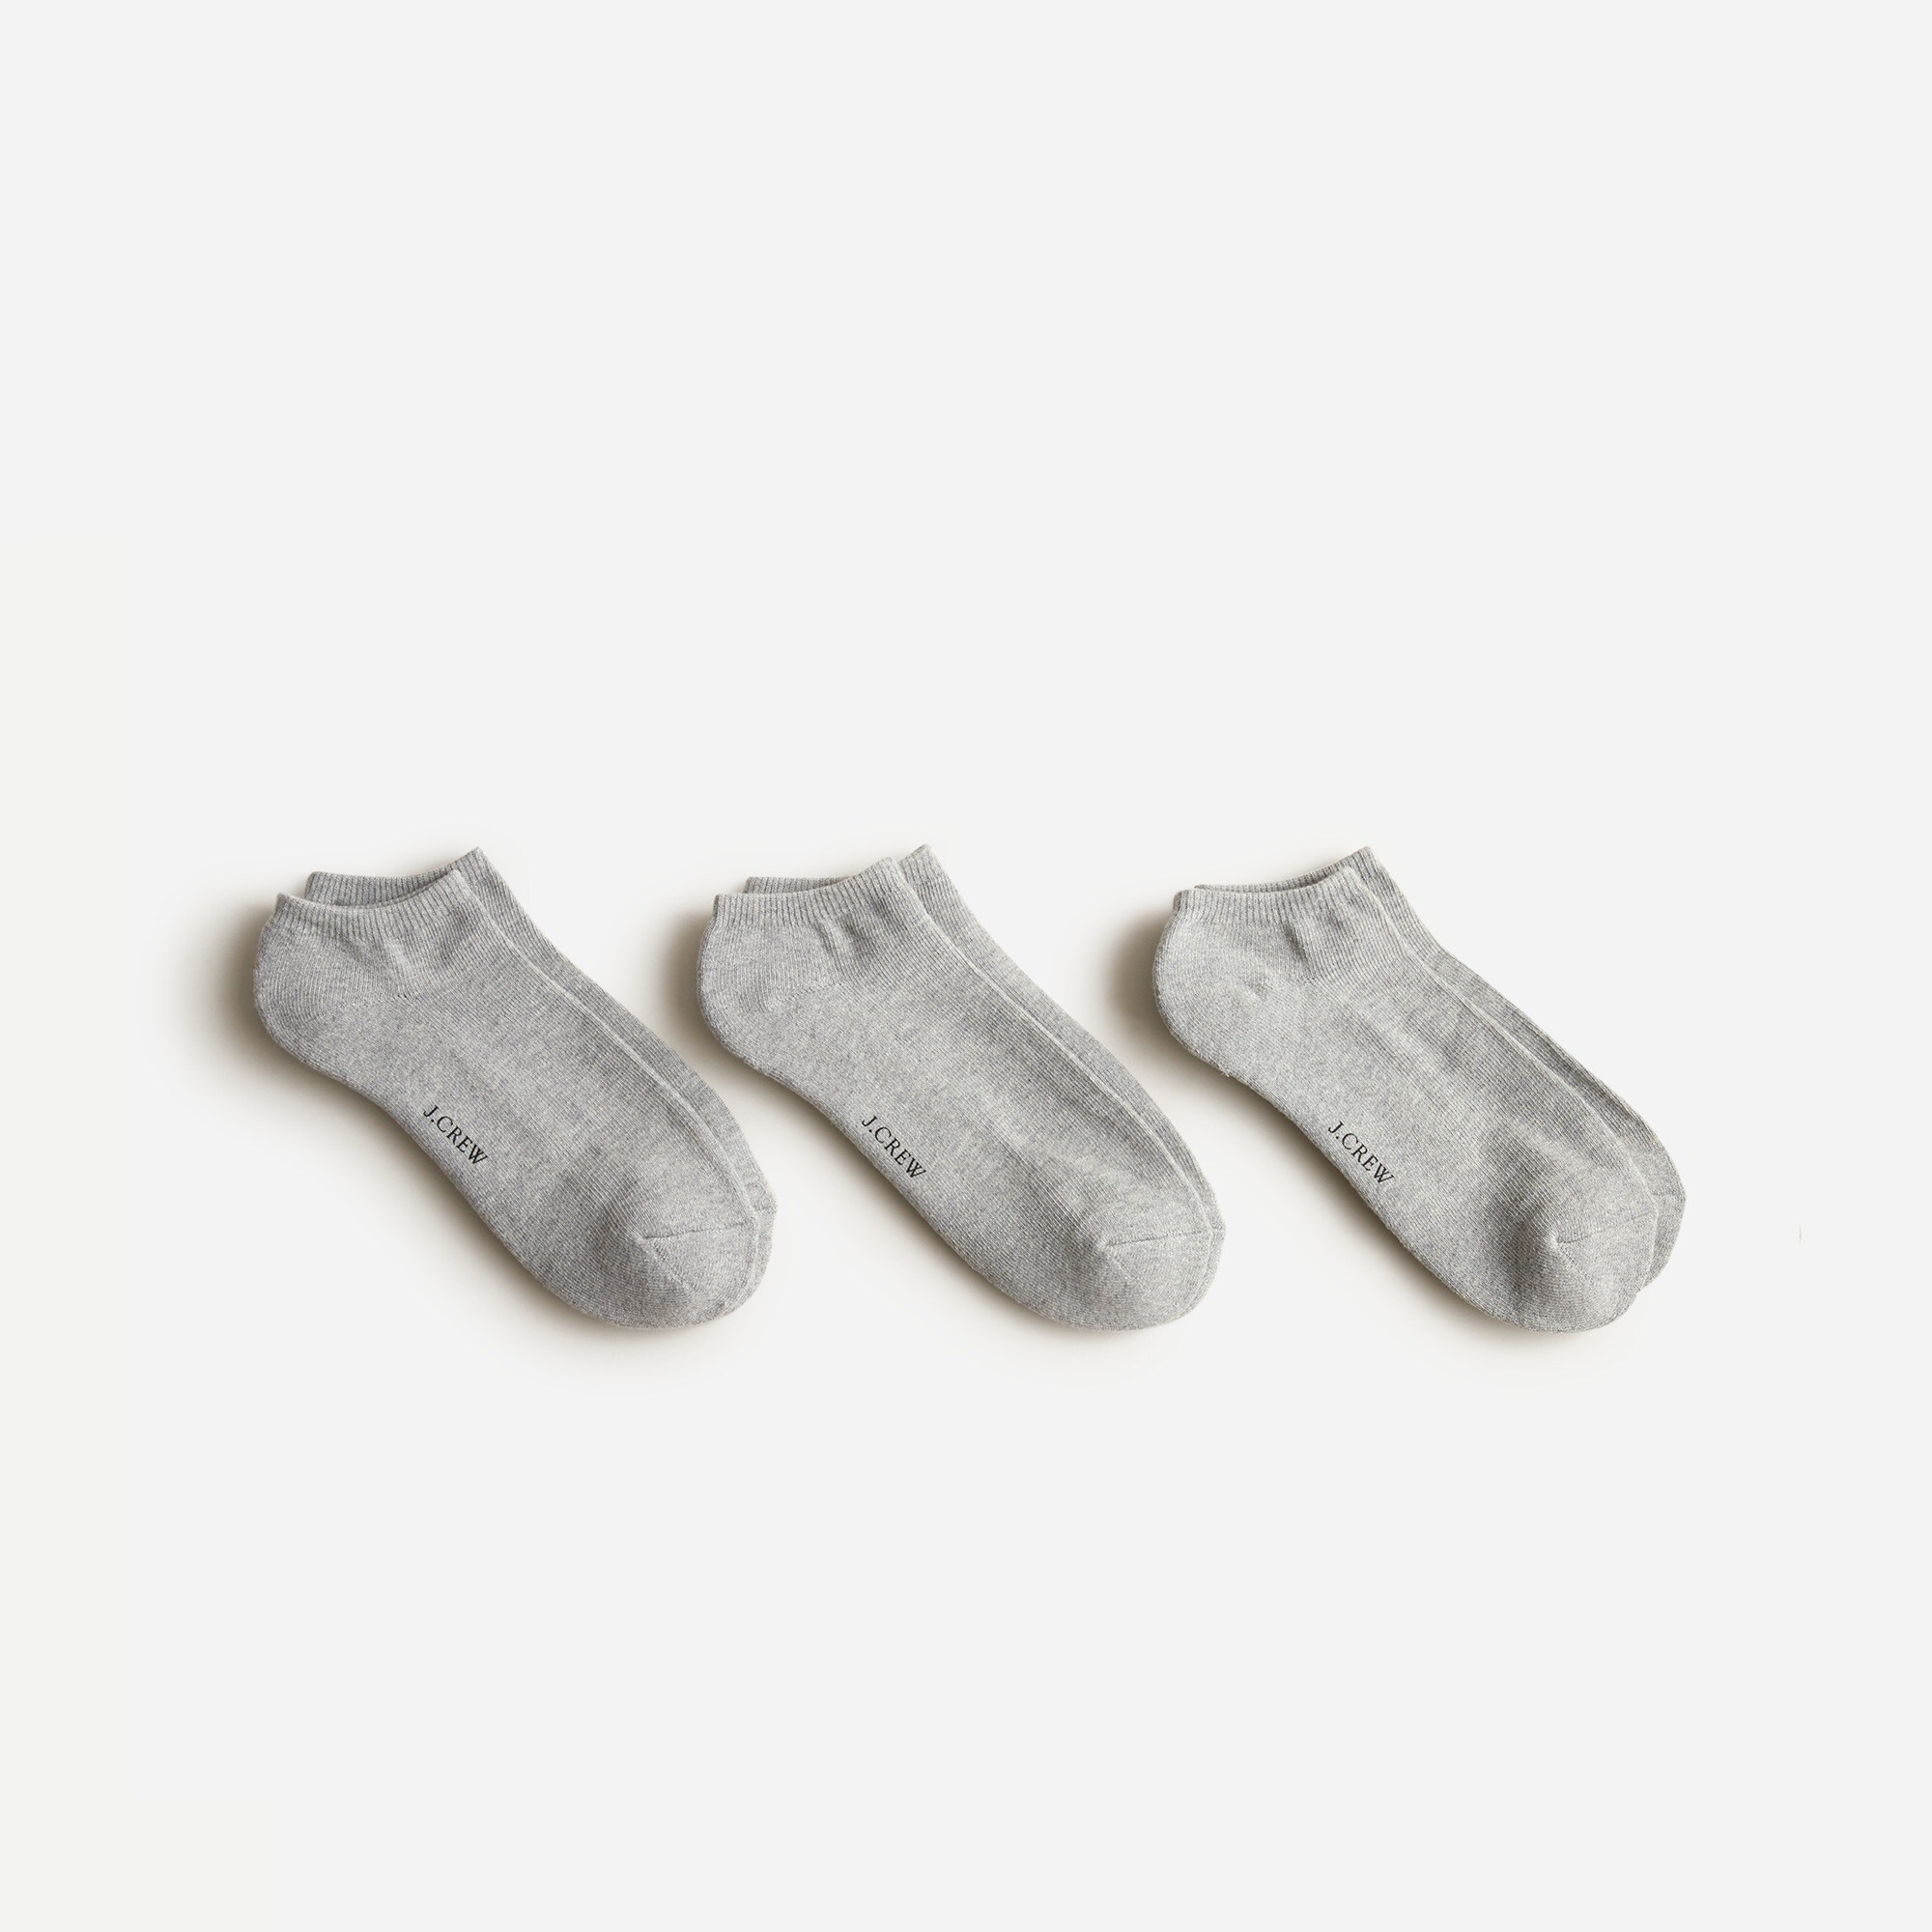 mens Athletic socks three-pack